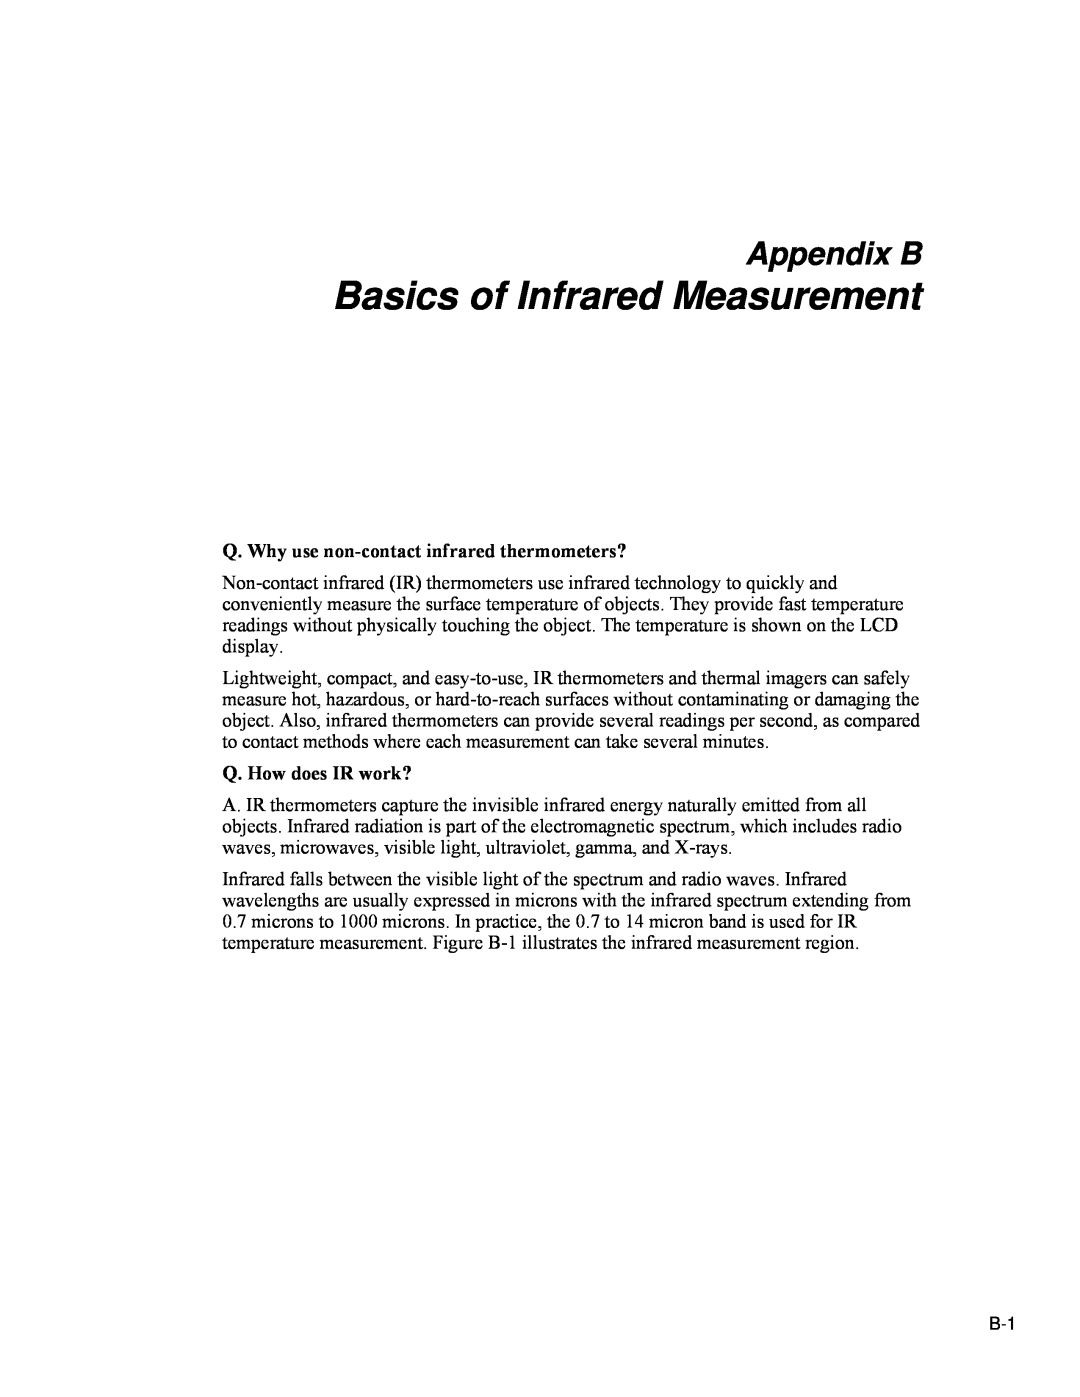 Fluke Ti20 user manual Basics of Infrared Measurement, Appendix B 